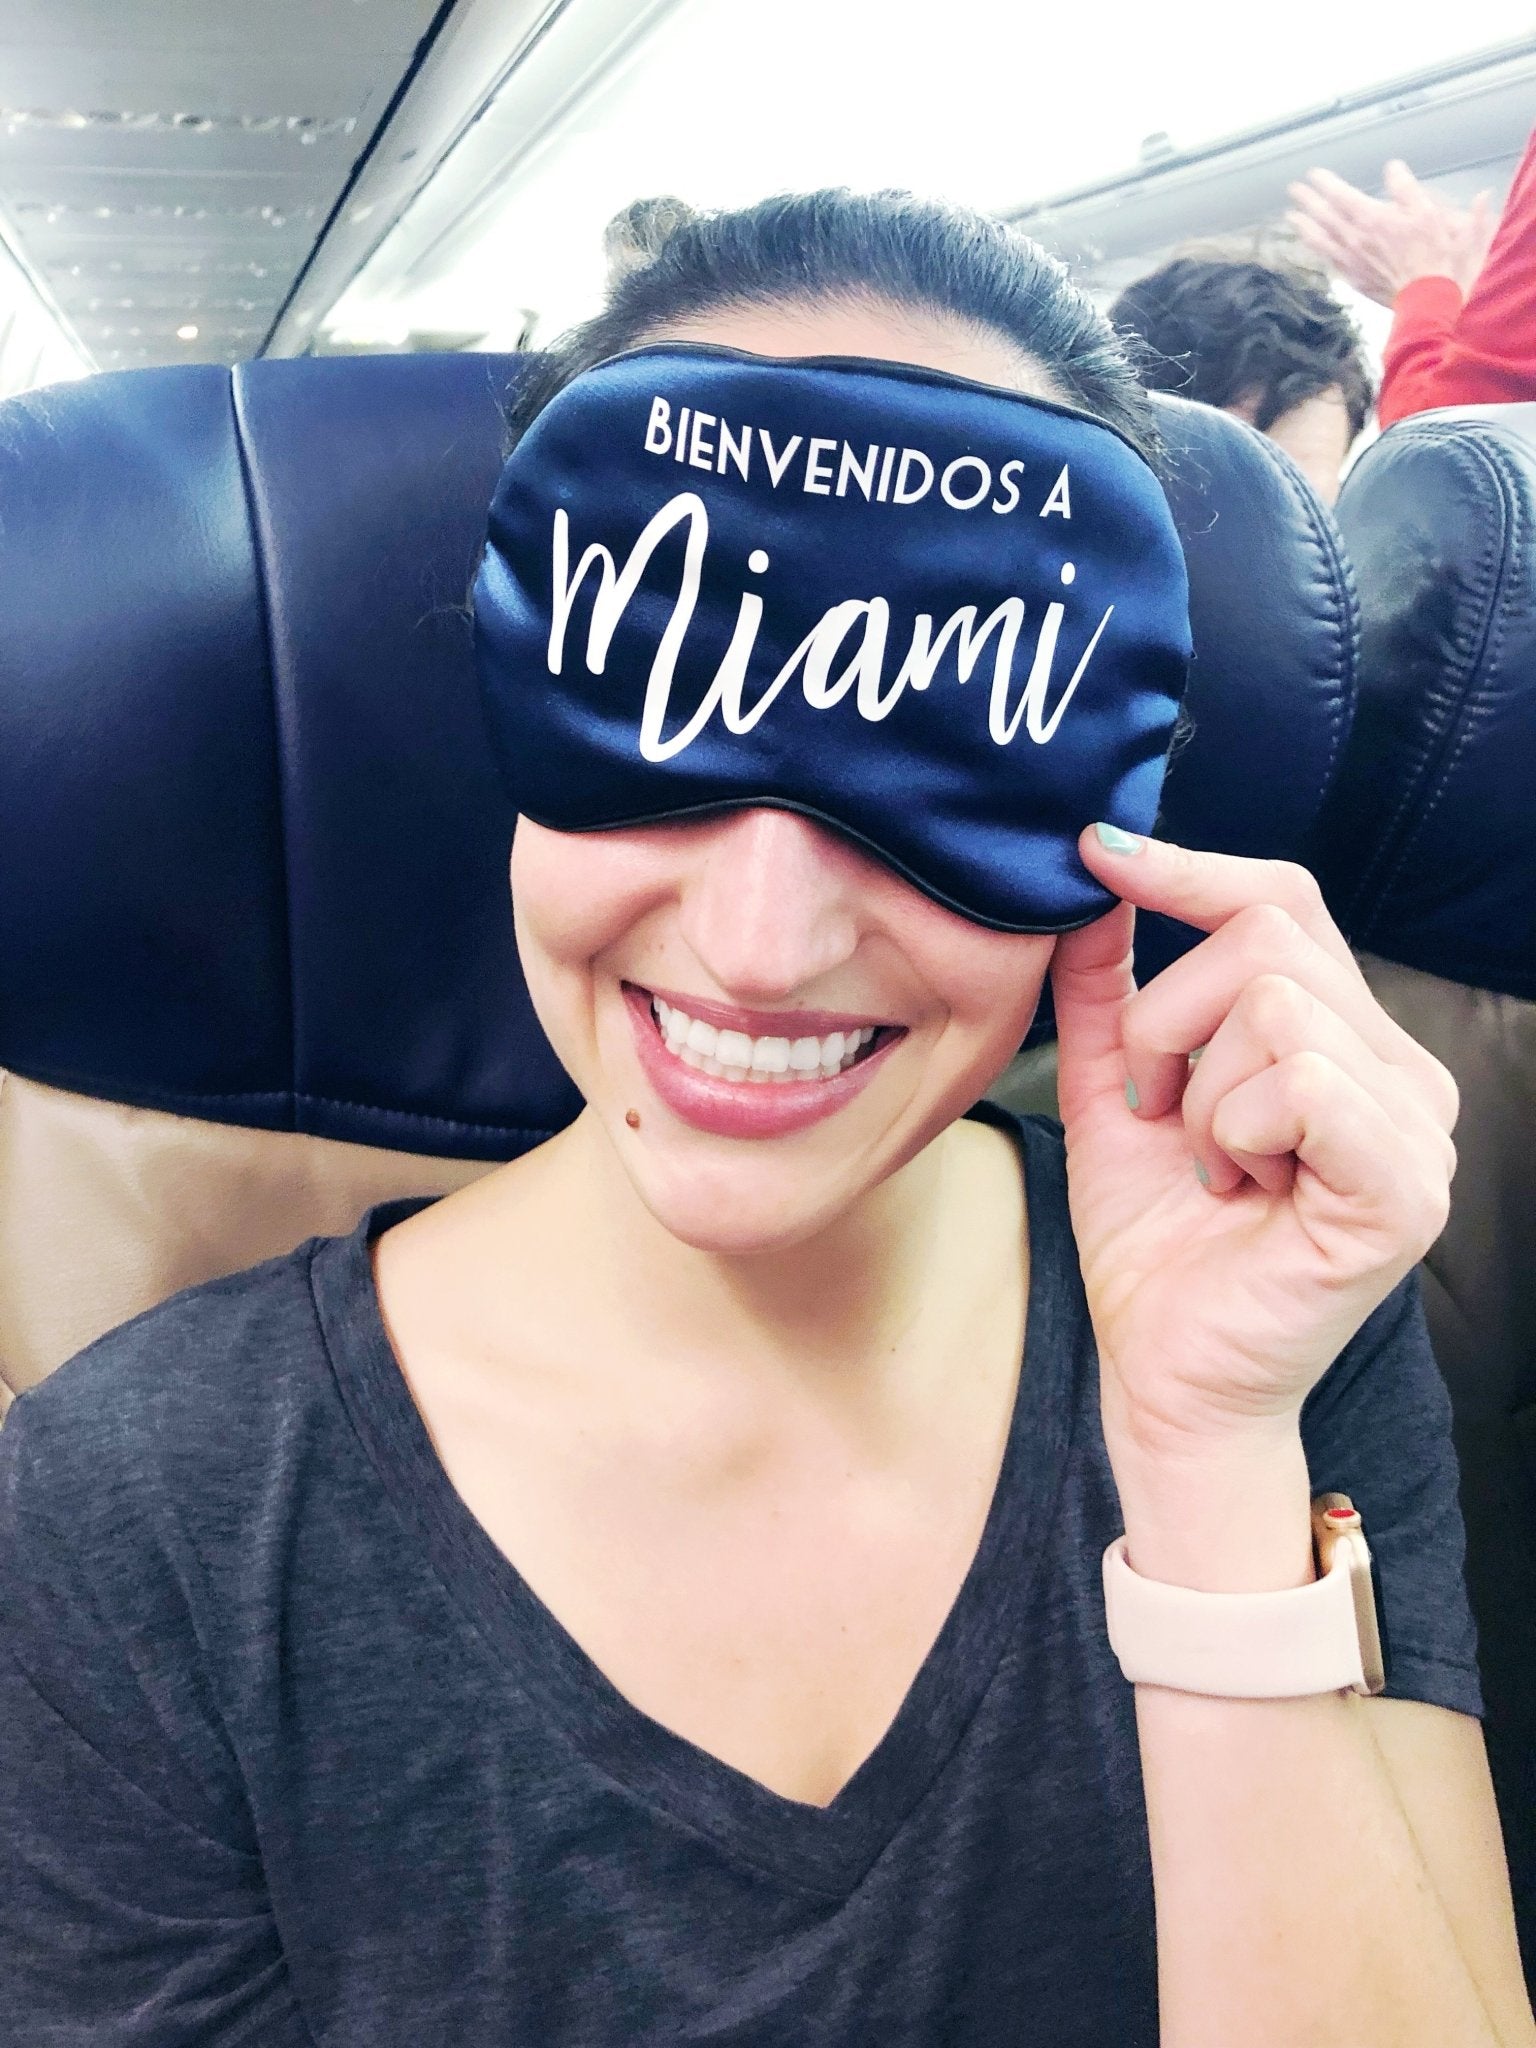 A navy colored sleep mask reads "bienvenidos a Miami"